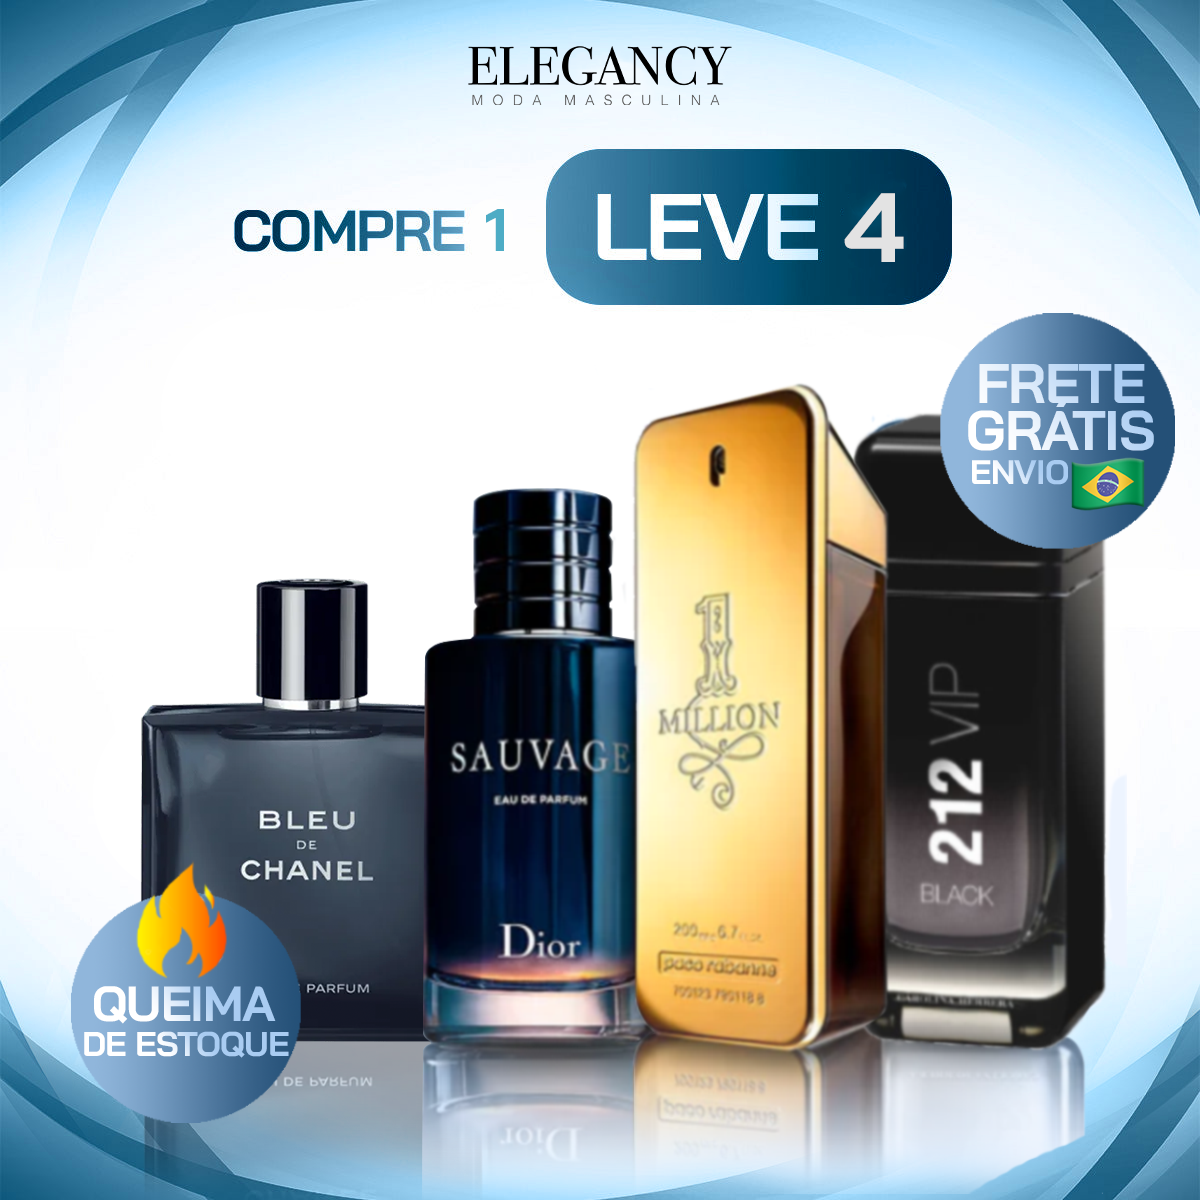 Combo 4 Perfumes Masculinos Importados (100ml) - 1 million, 212 vip, sauvage, bleu [QUEIMA DE ESTOQUE]